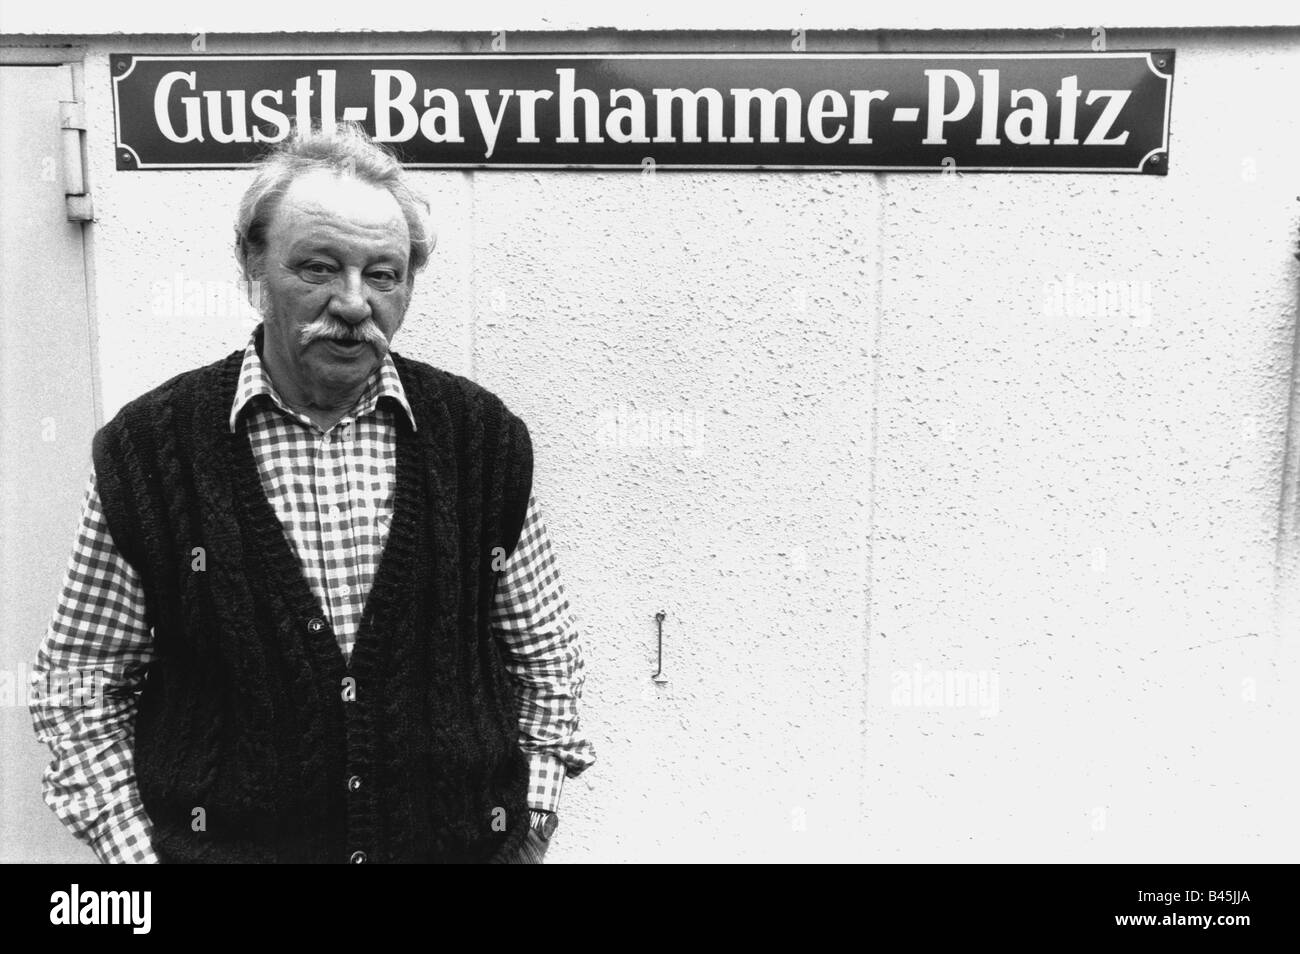 Bayrhammer, Gustl, 12.2.1922 - 24.4.1993, German actor, half length, standing in front of road sign 'Gustl-Bayrhammer-Platz', late 1980s, Stock Photo